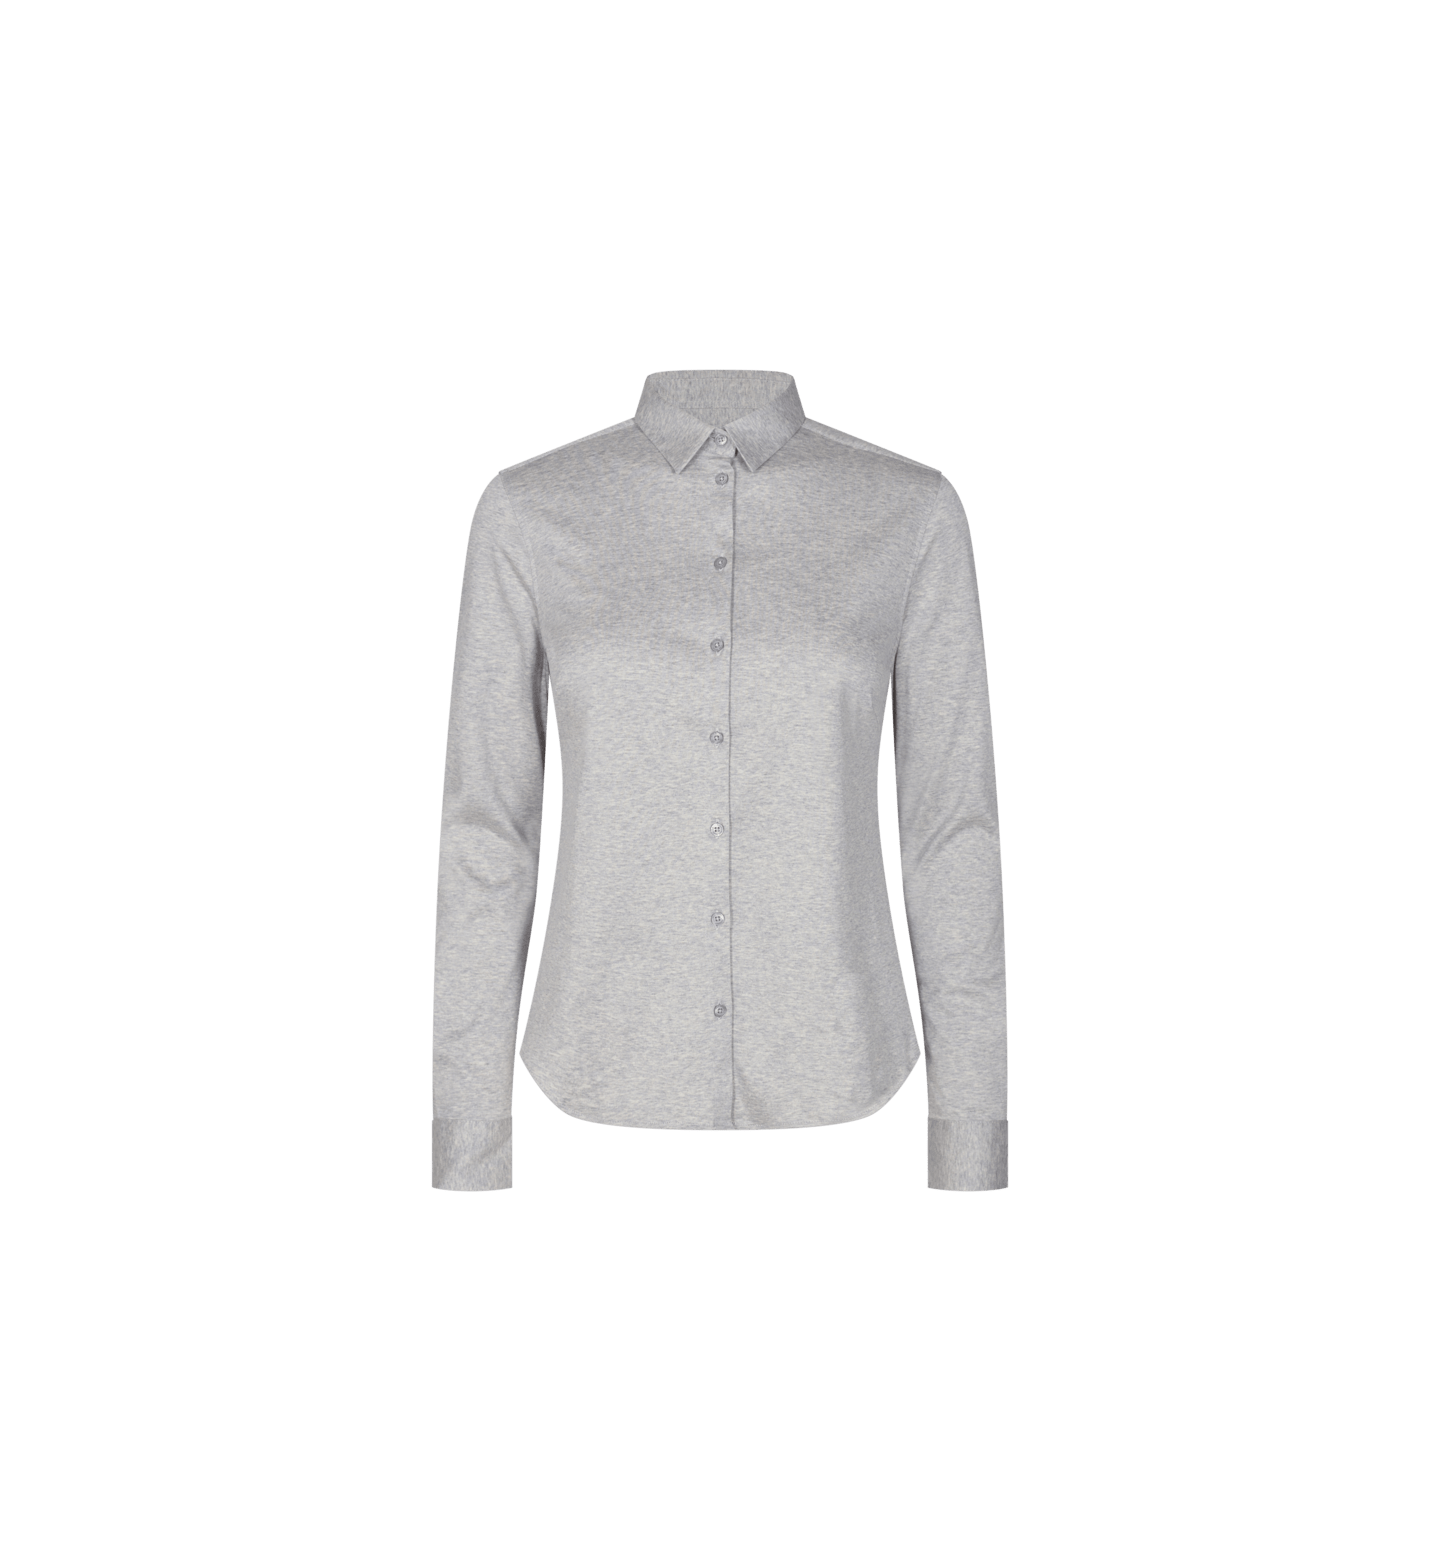 MOS MOSH - Tina Light Grey Melange Jersey Shirt – Energy Clothing Stamford